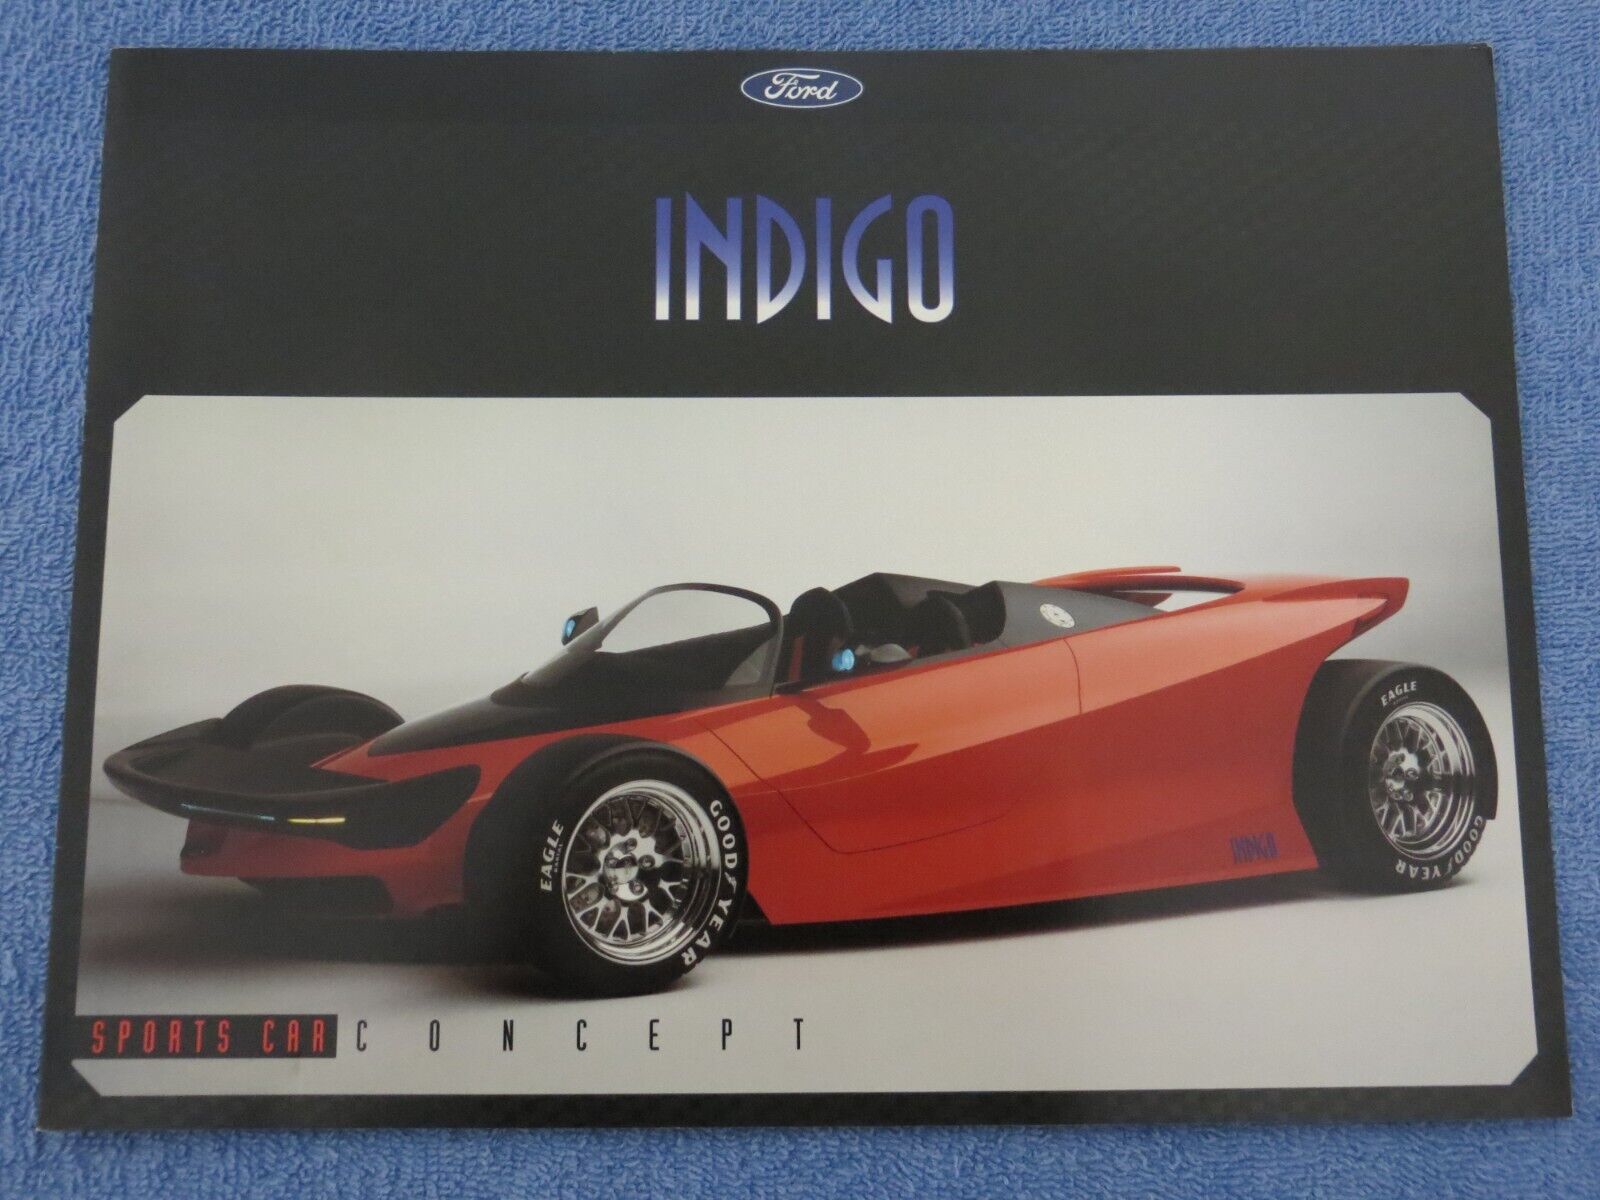 Vintage Ford 1996 INDIGO Sports Car Concept Vehicle Brochure Autorama Pickup